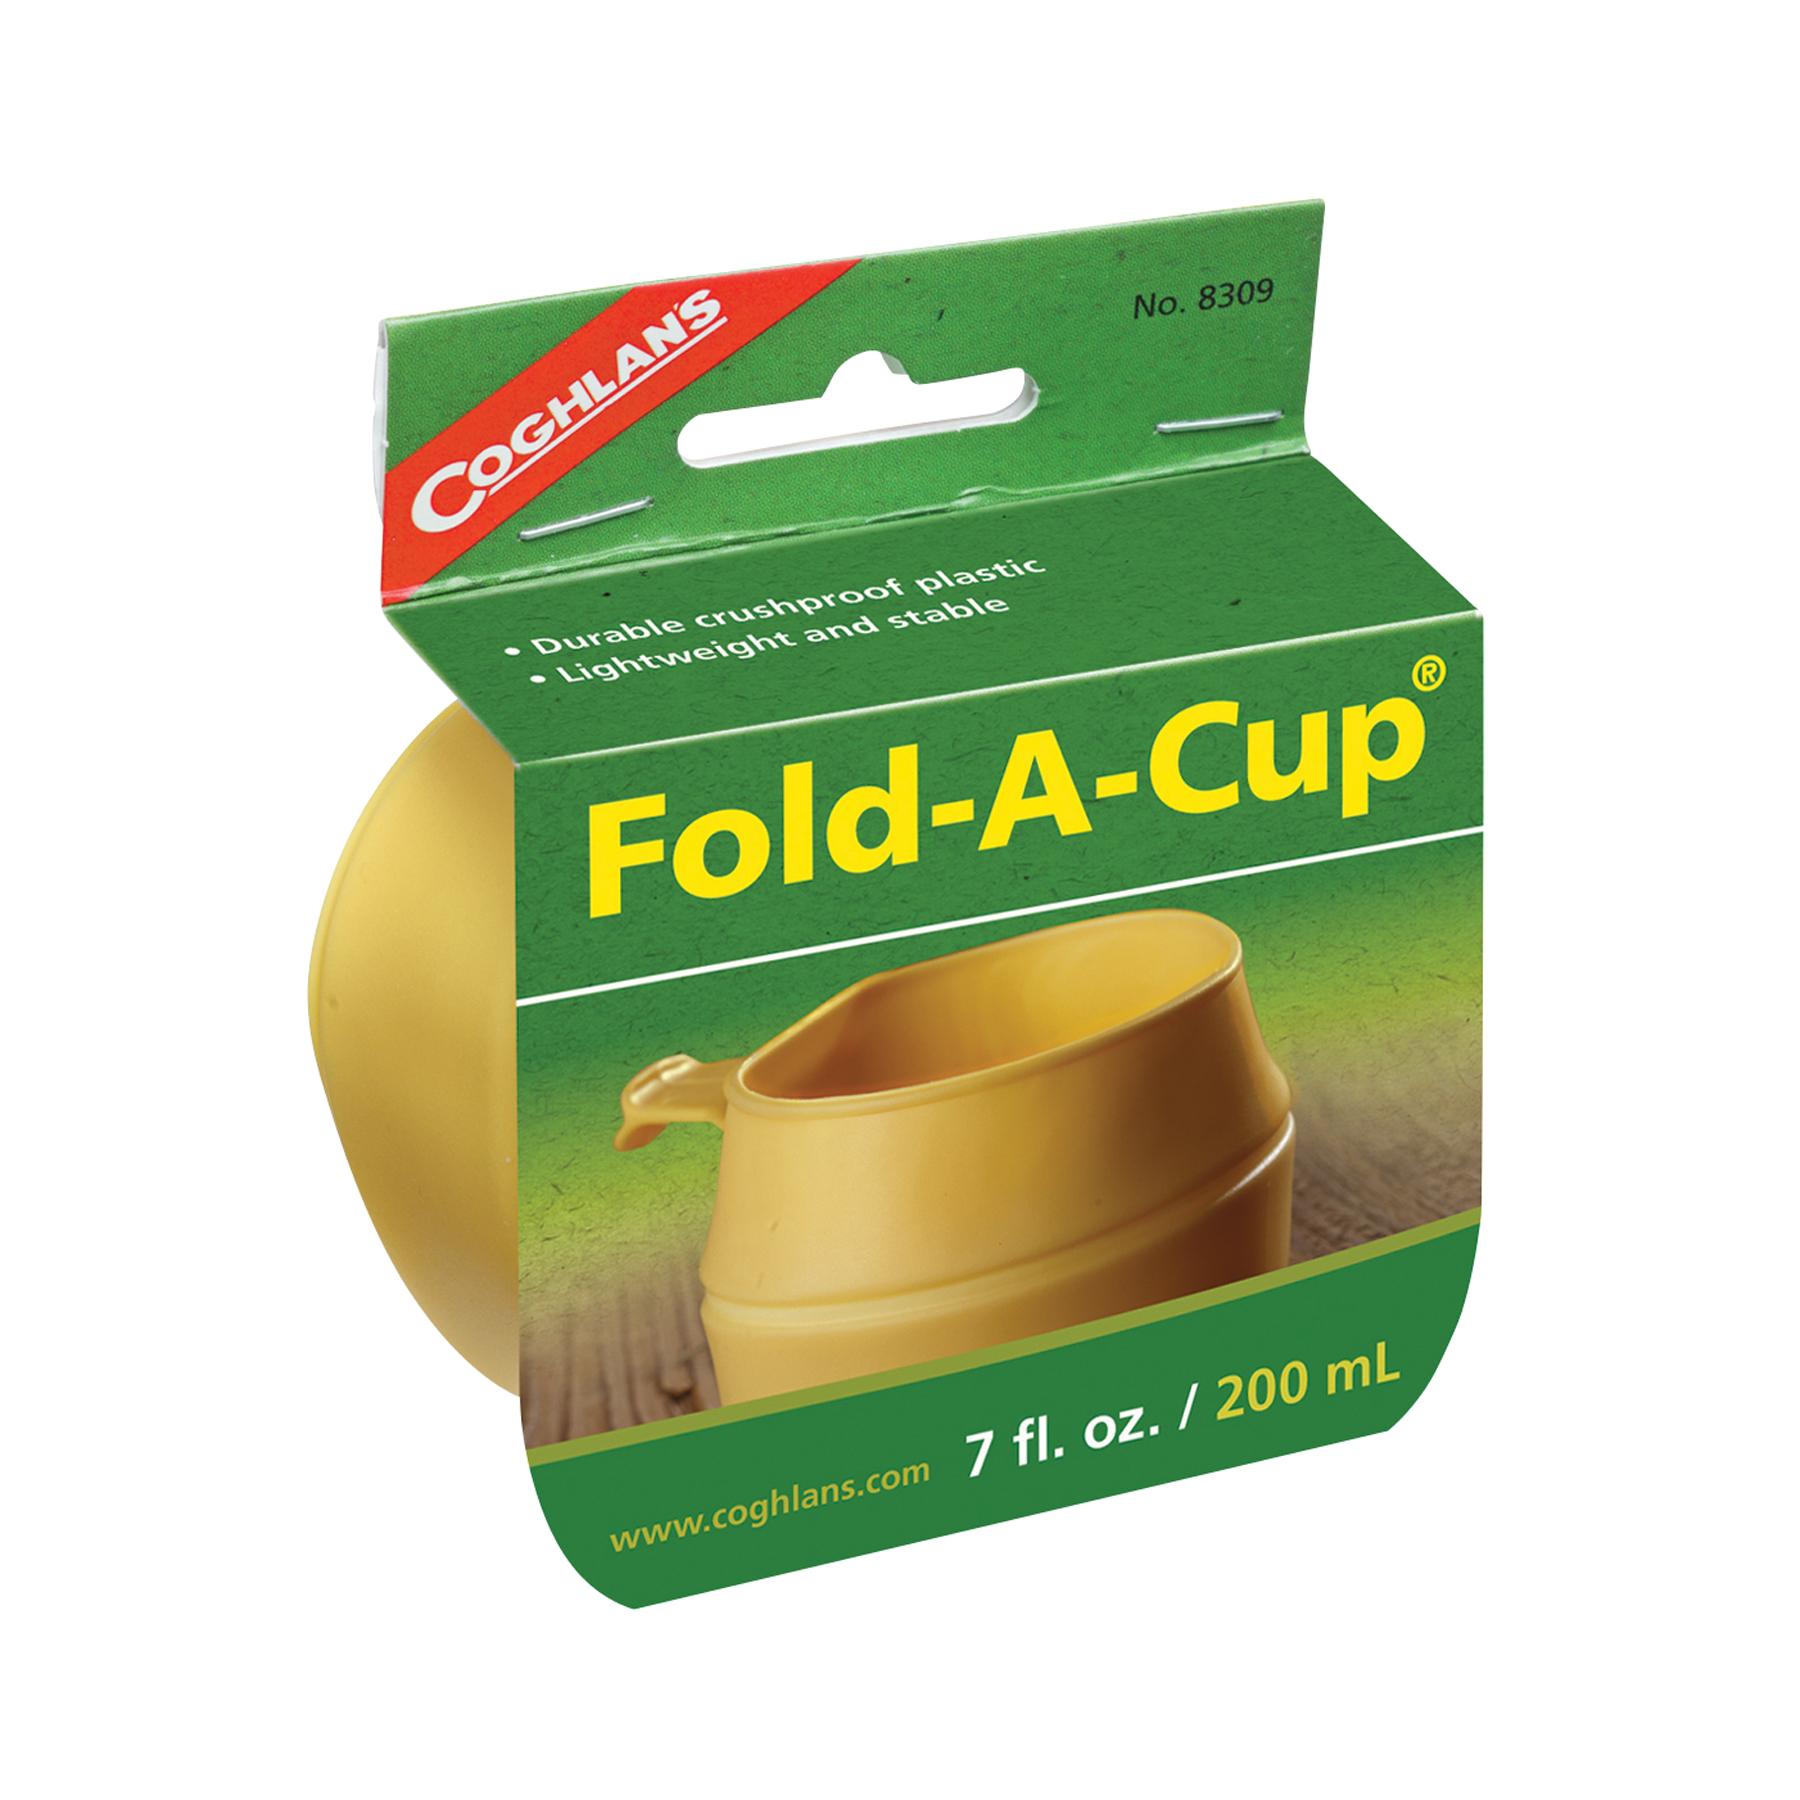  Fold- A- Cup